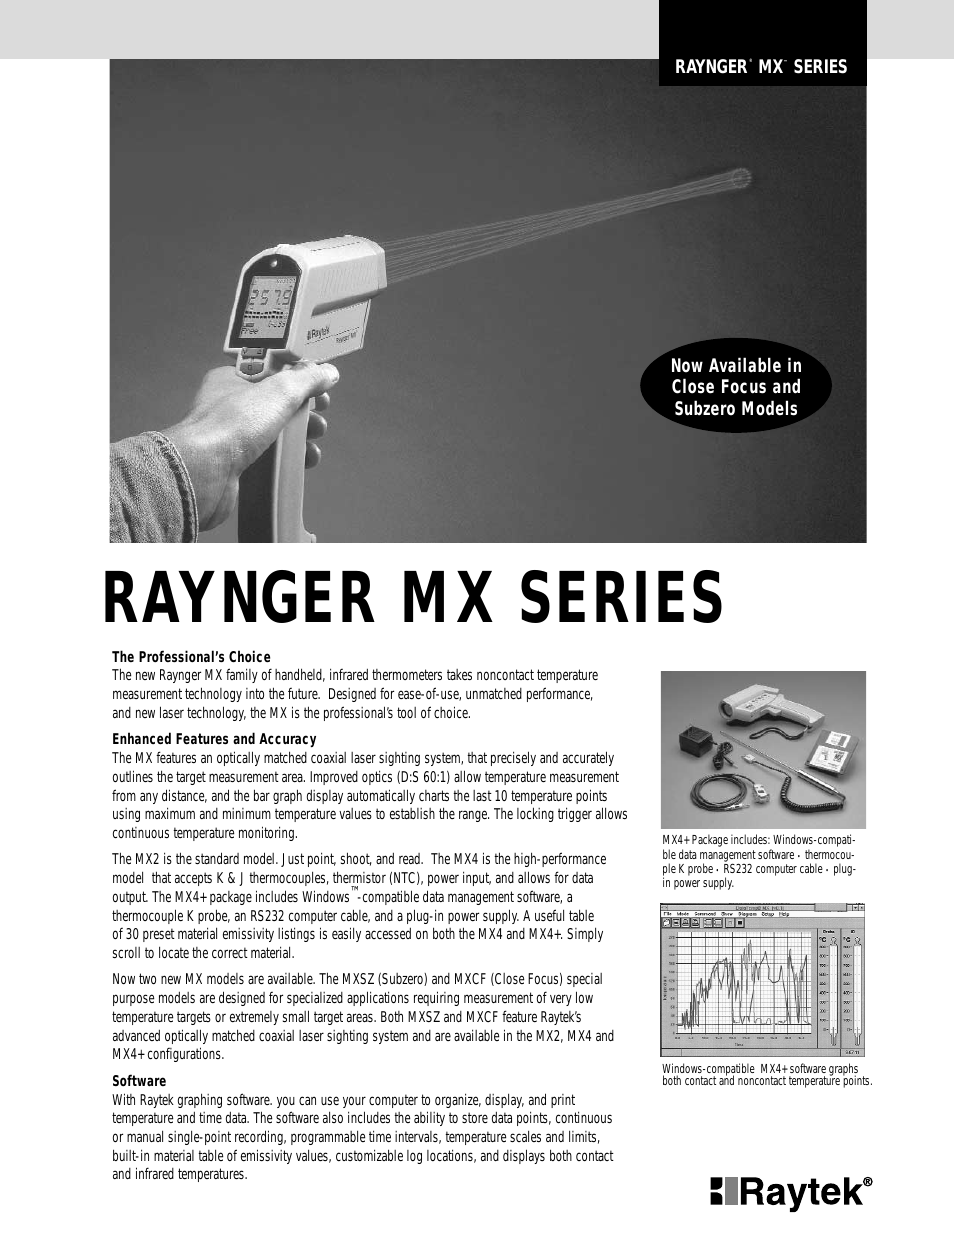 Raynger MX Series